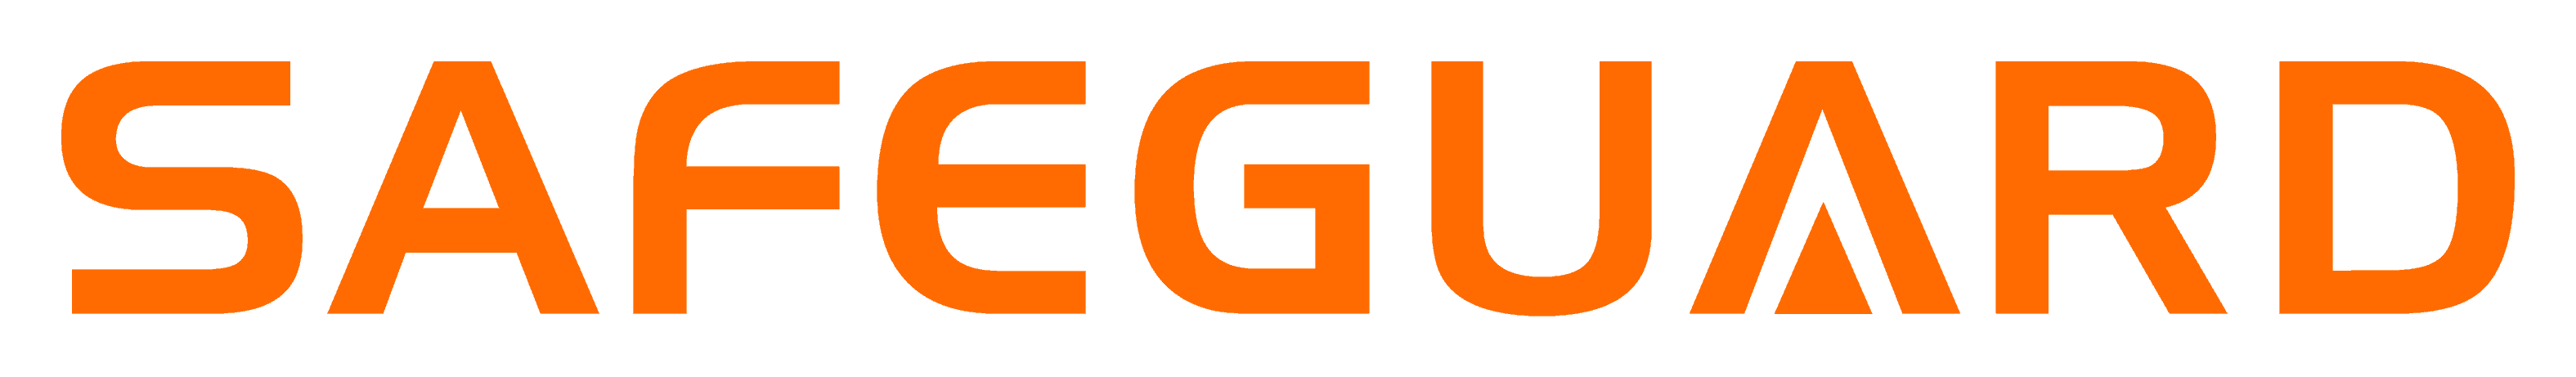 Safeguard logo orange